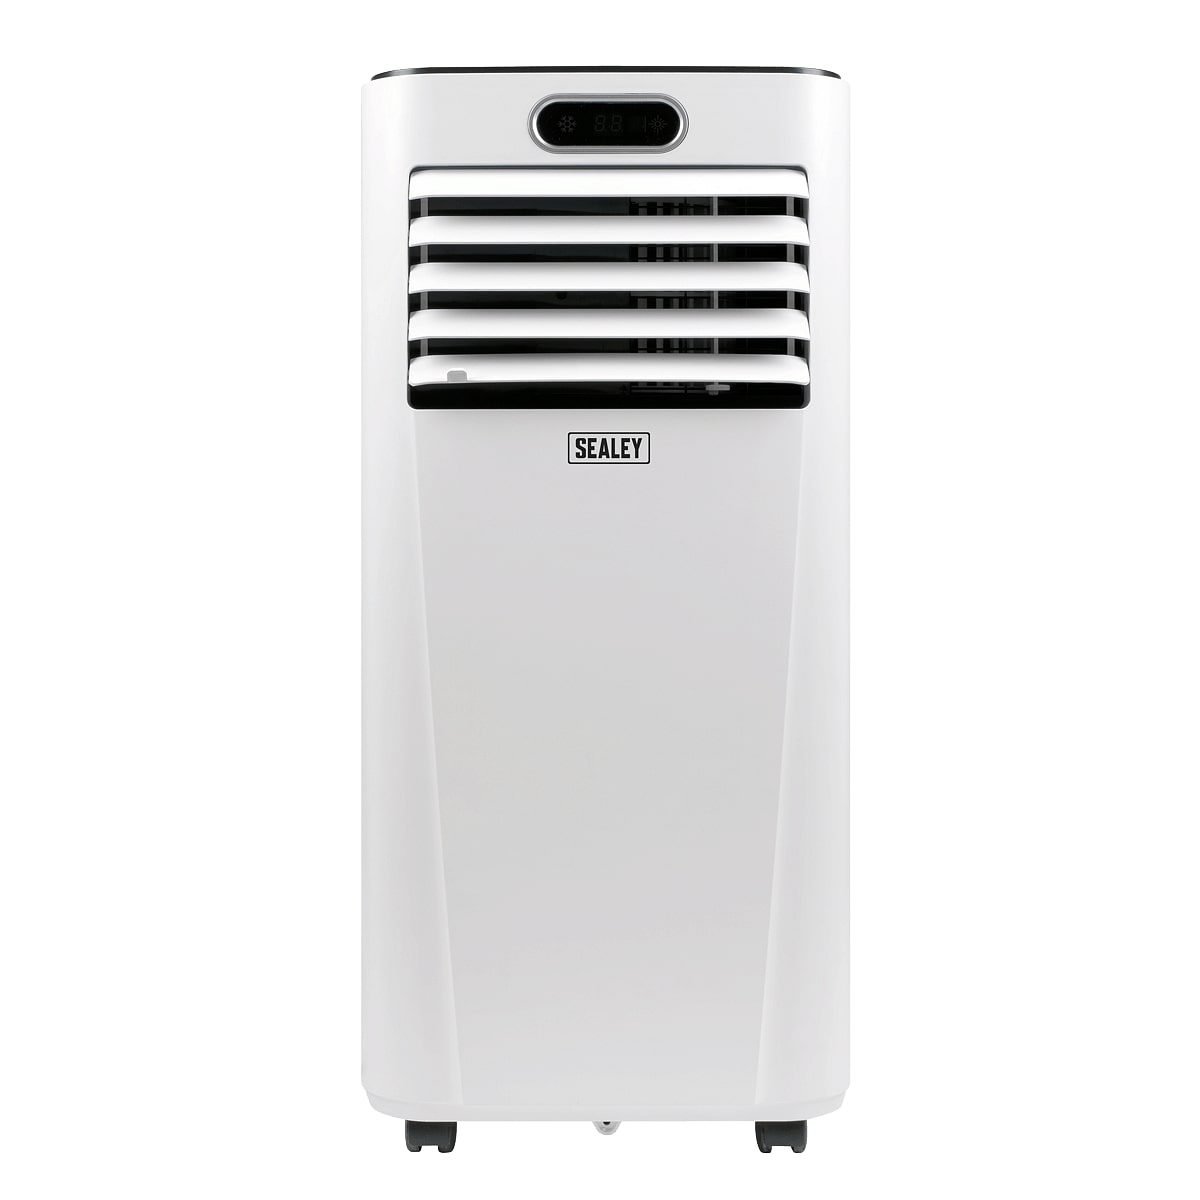 Sealey SAC7000 Portable Air Conditioner, Dehumidifier and Air Cooler